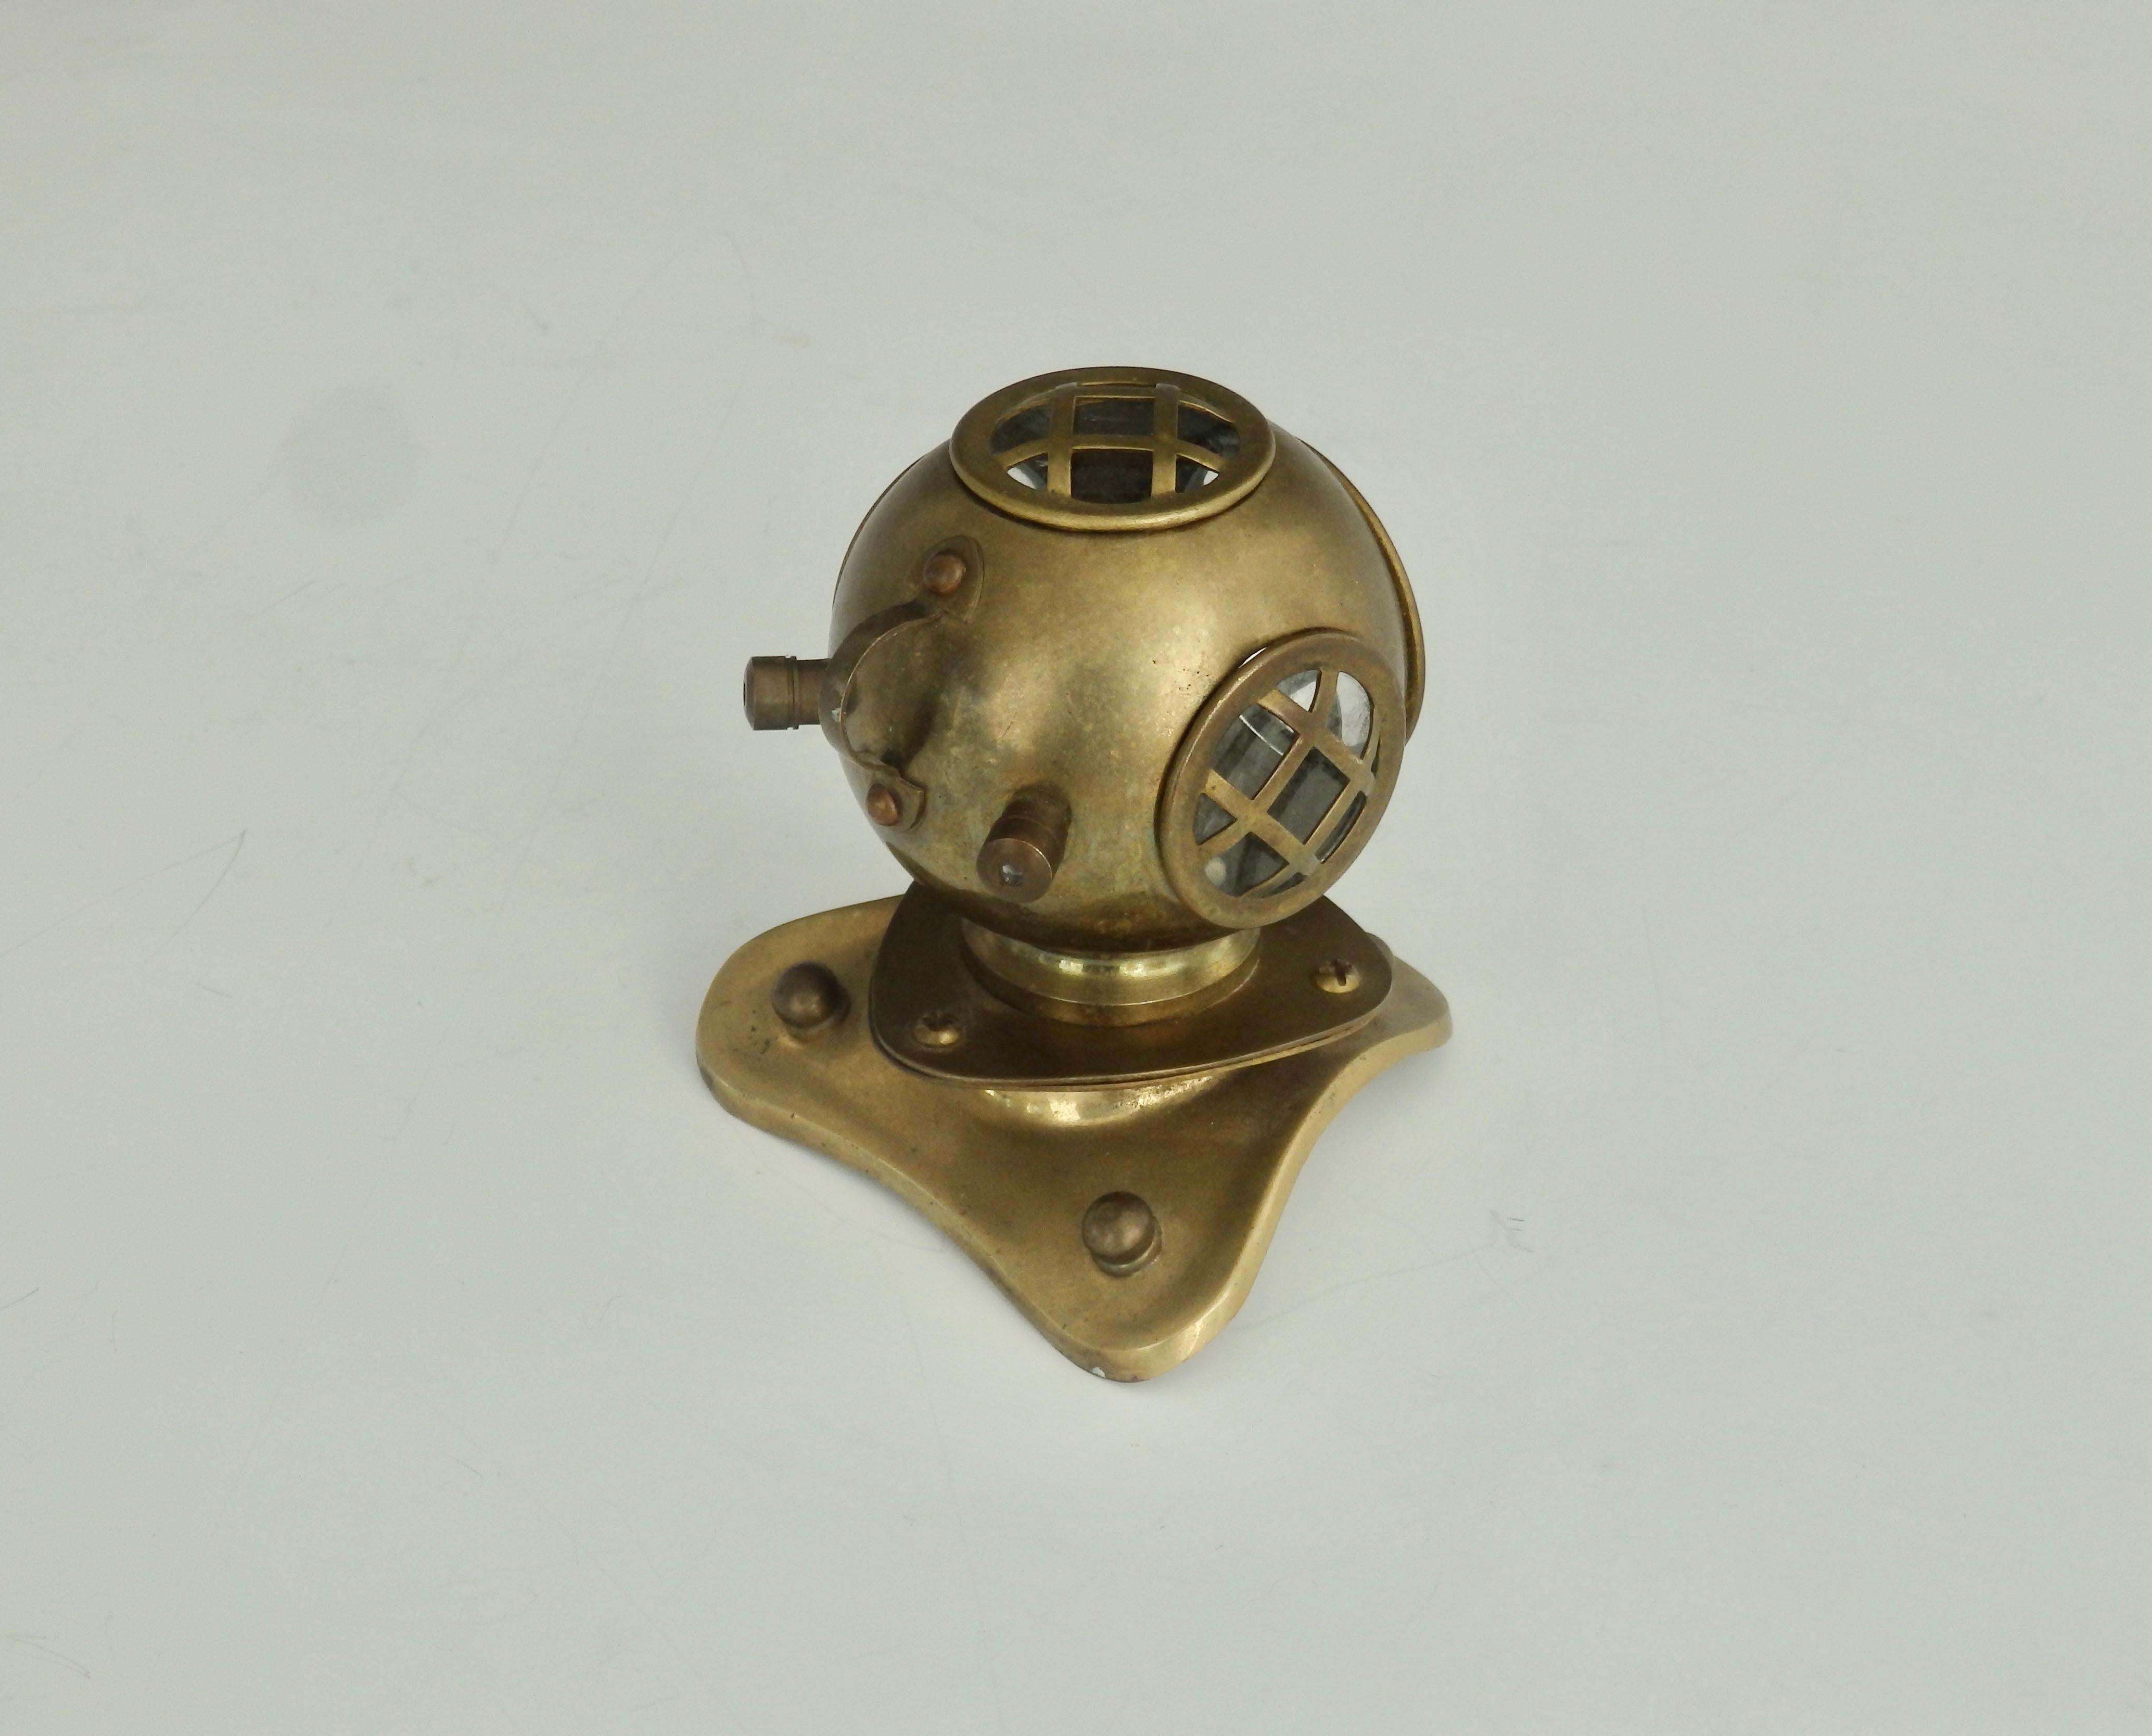 Diving bell replica in brass as a desktop or bookshelf accessory.